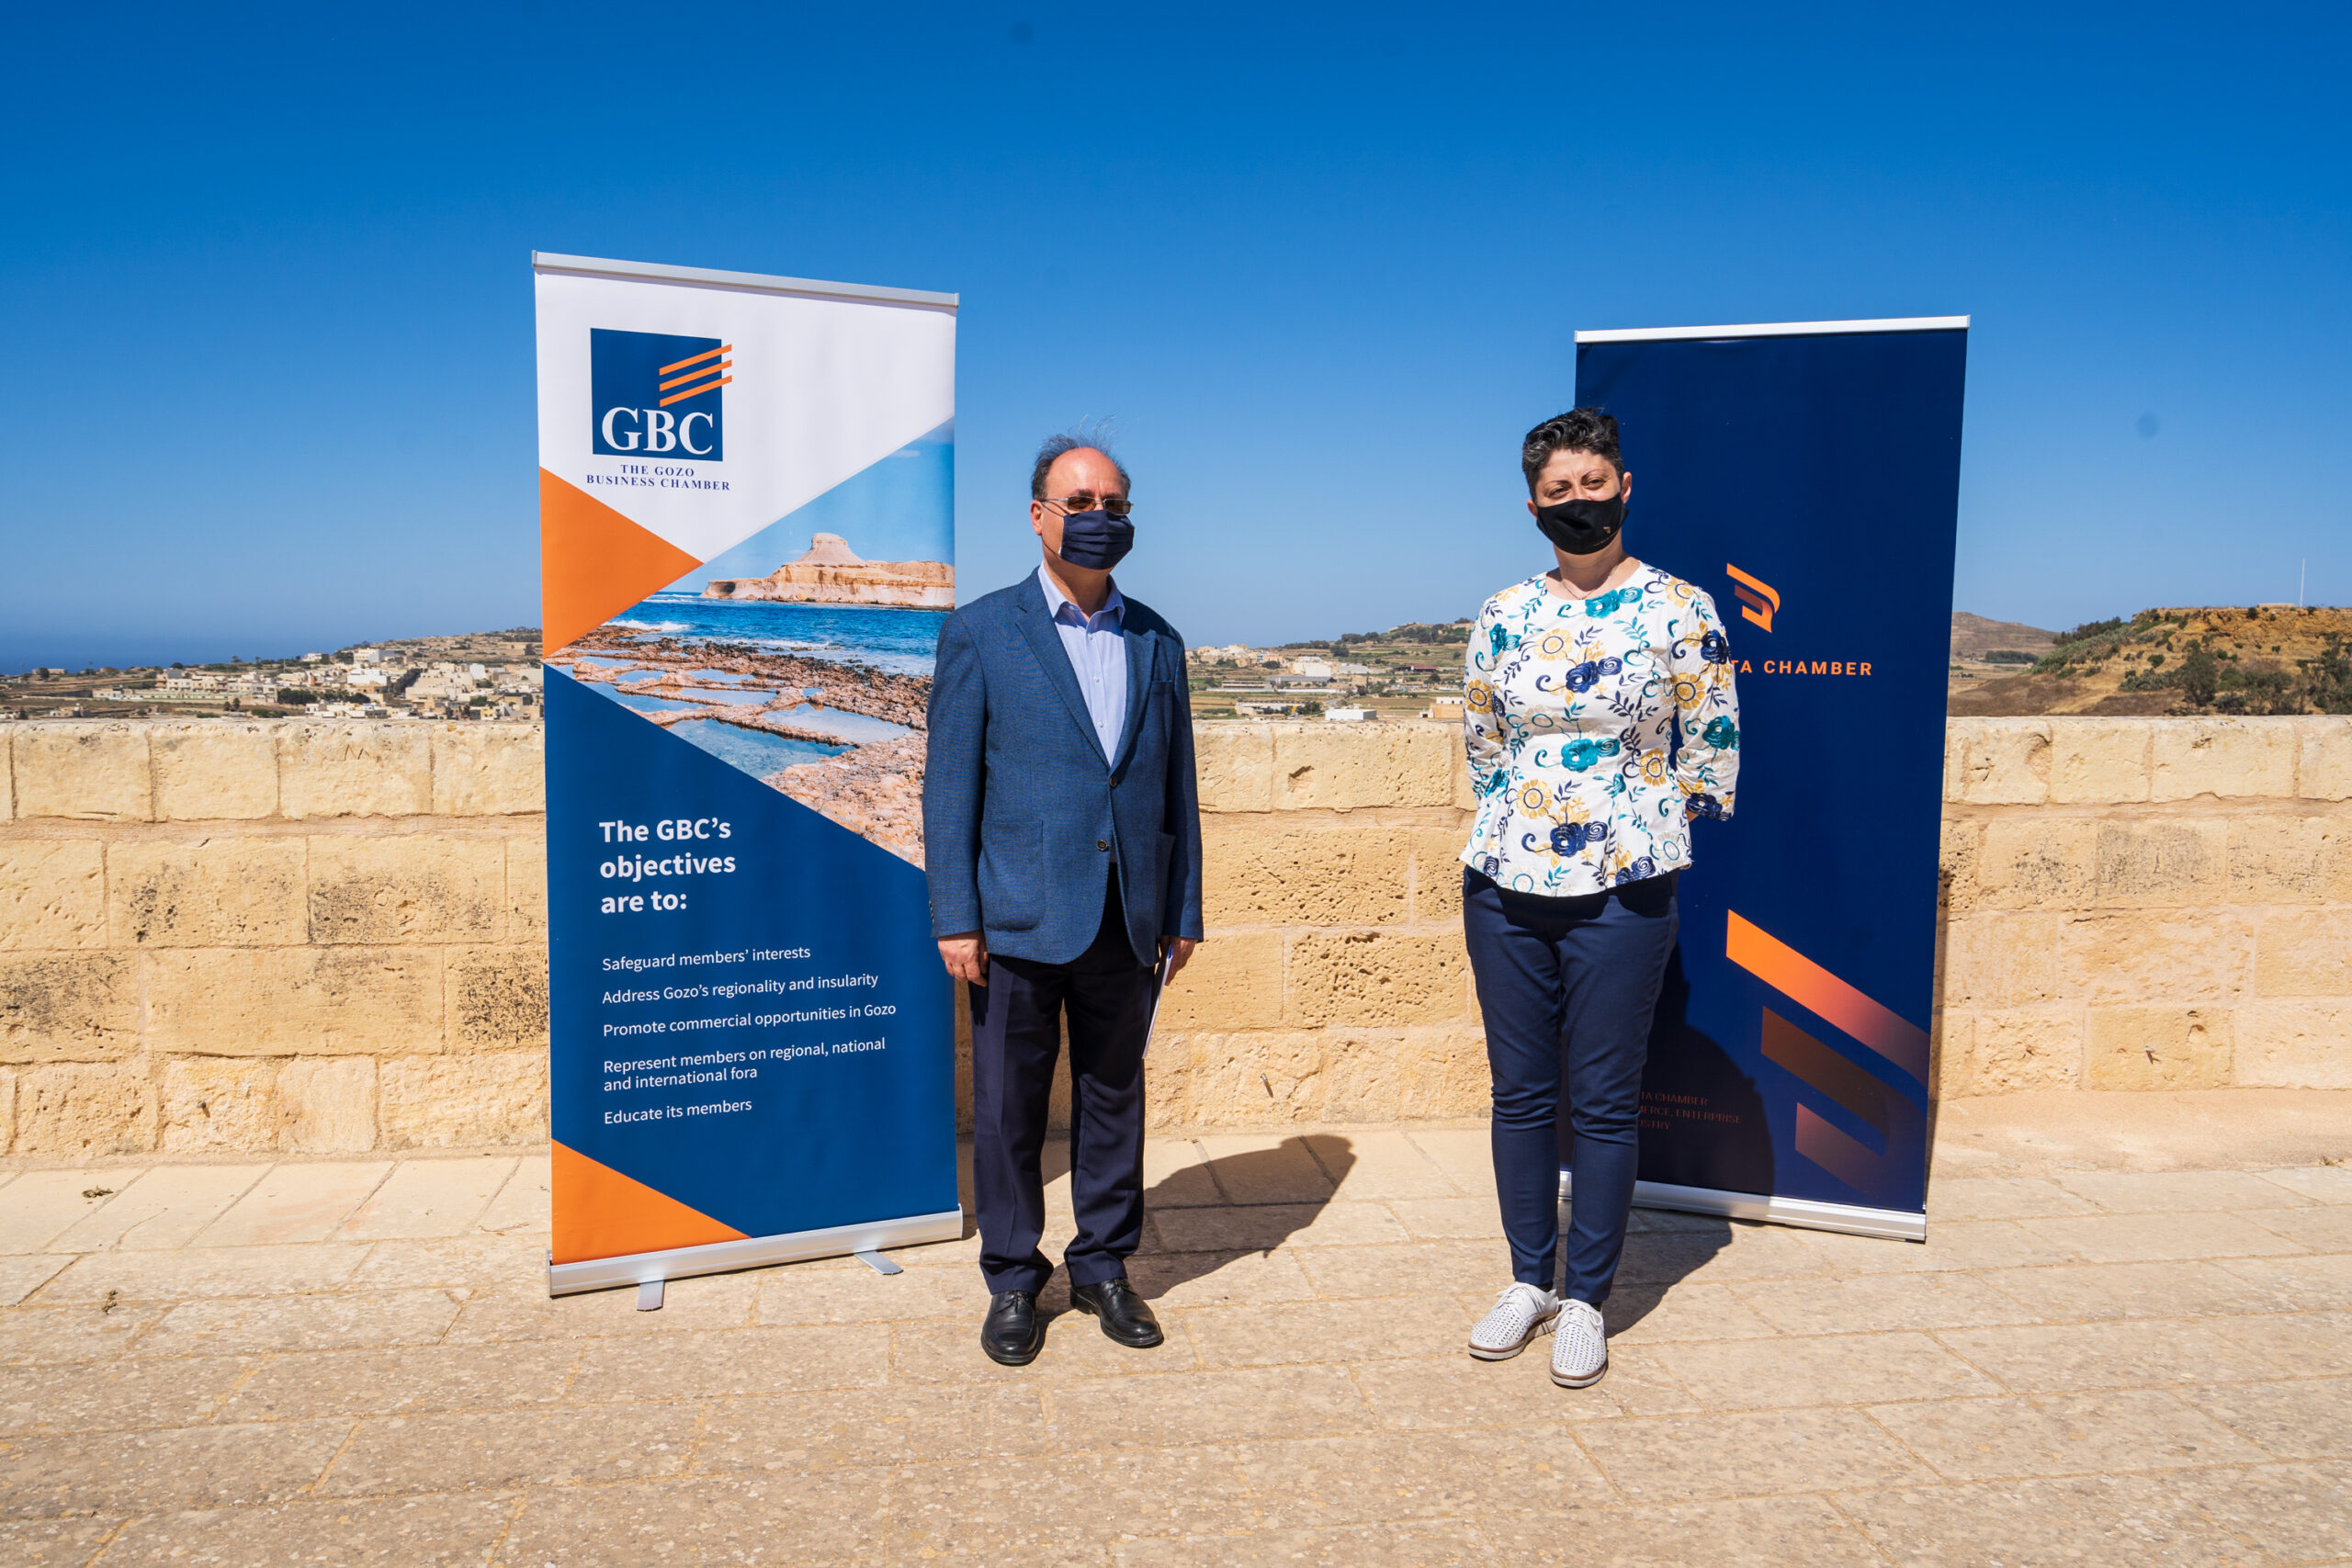 Promoting Sustainable Development in Gozo